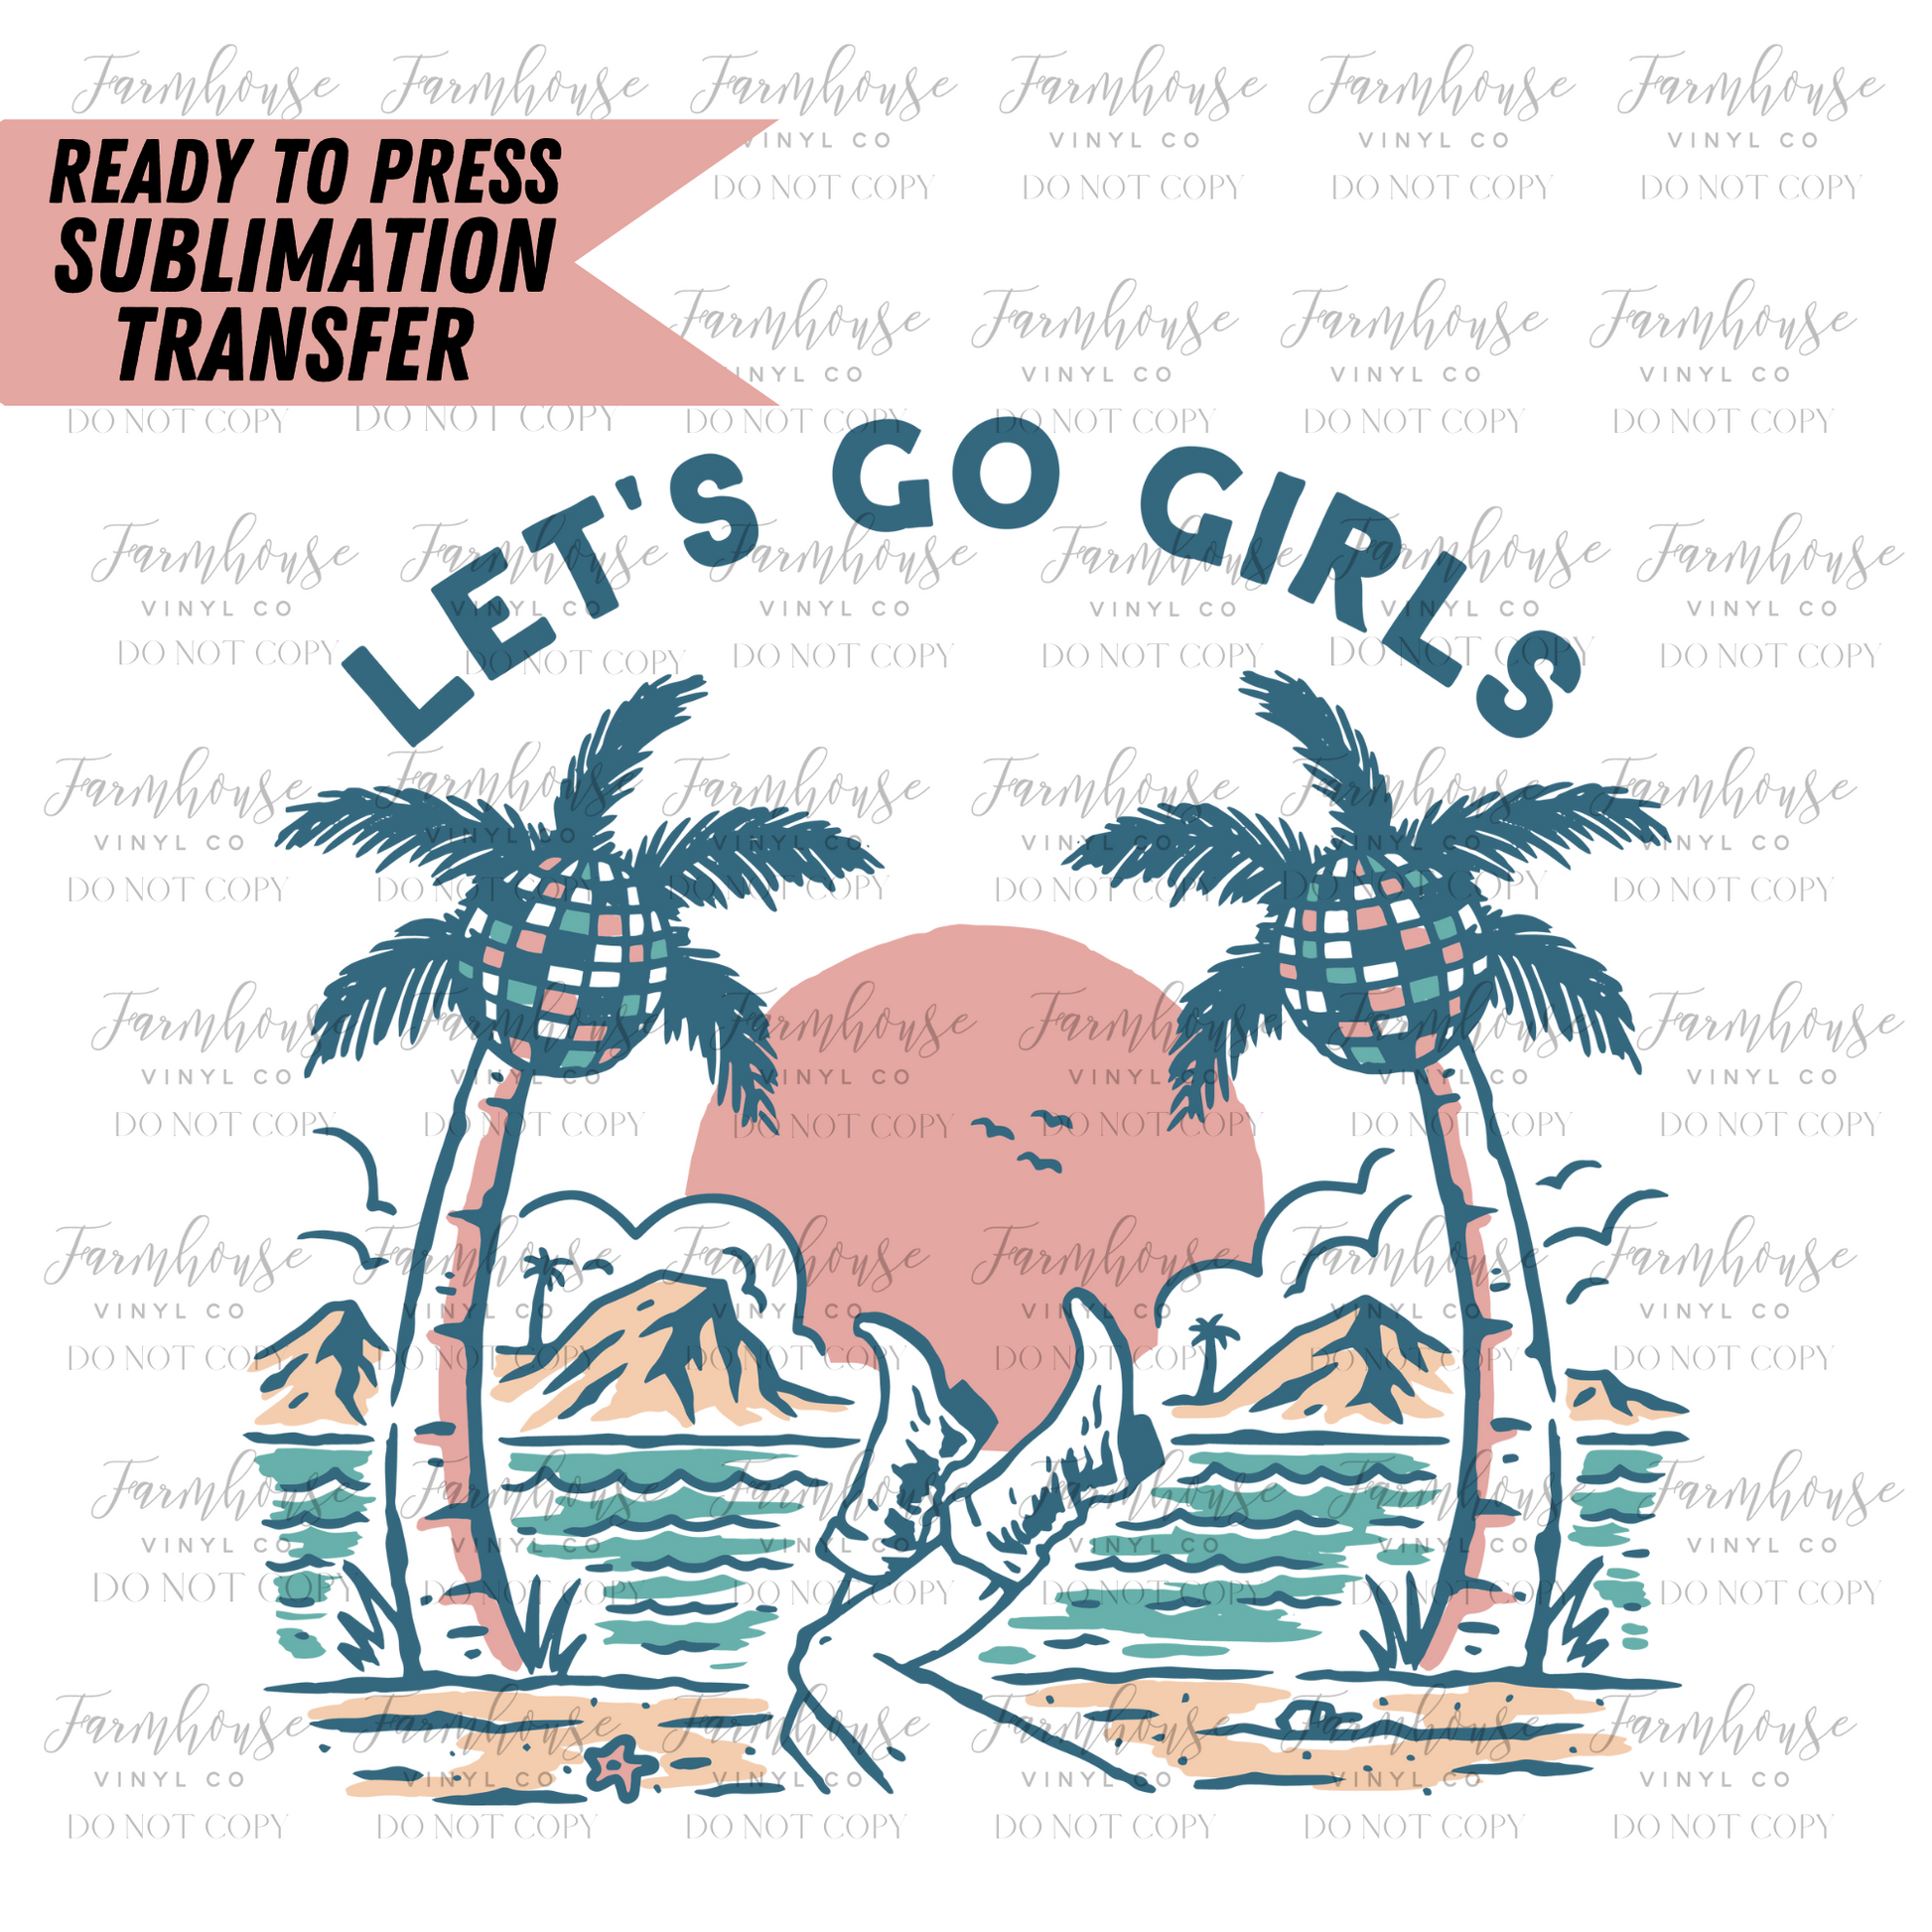 Lets Go Girls Ready To Press Sublimation Transfer - Farmhouse Vinyl Co